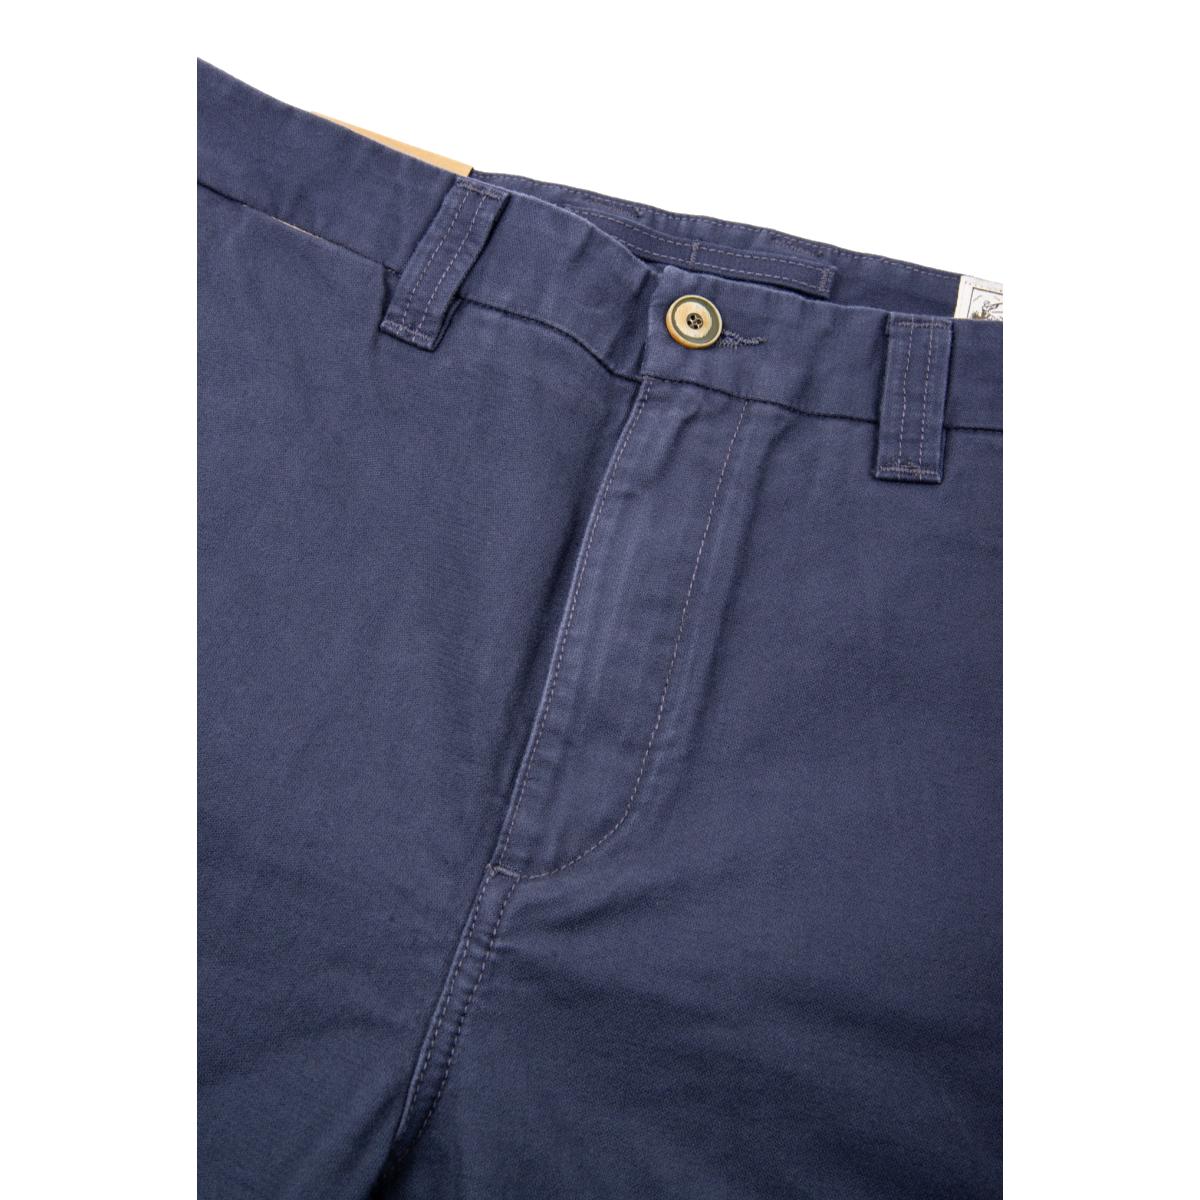 Deck Pant Navy - Pants